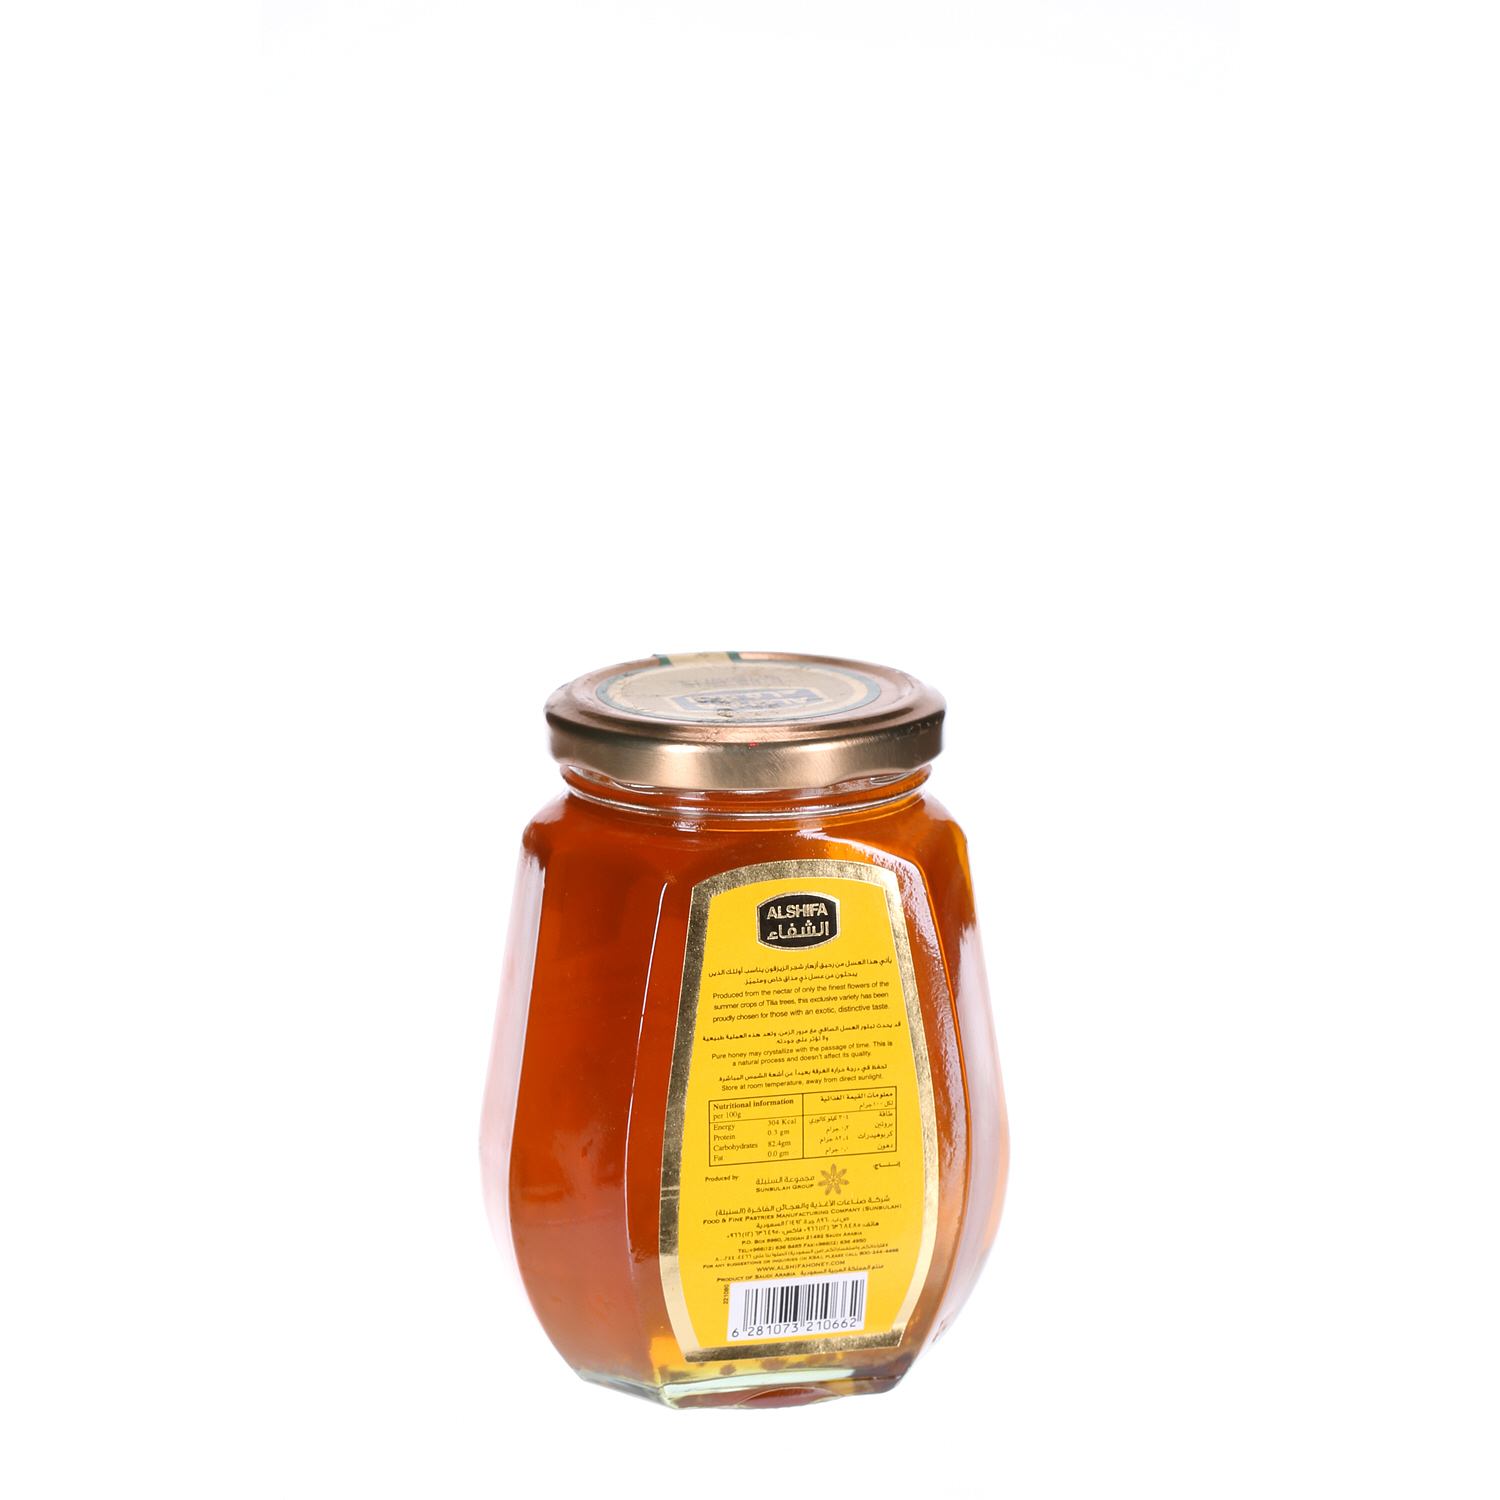 Al Shifa Honey Lime 500g